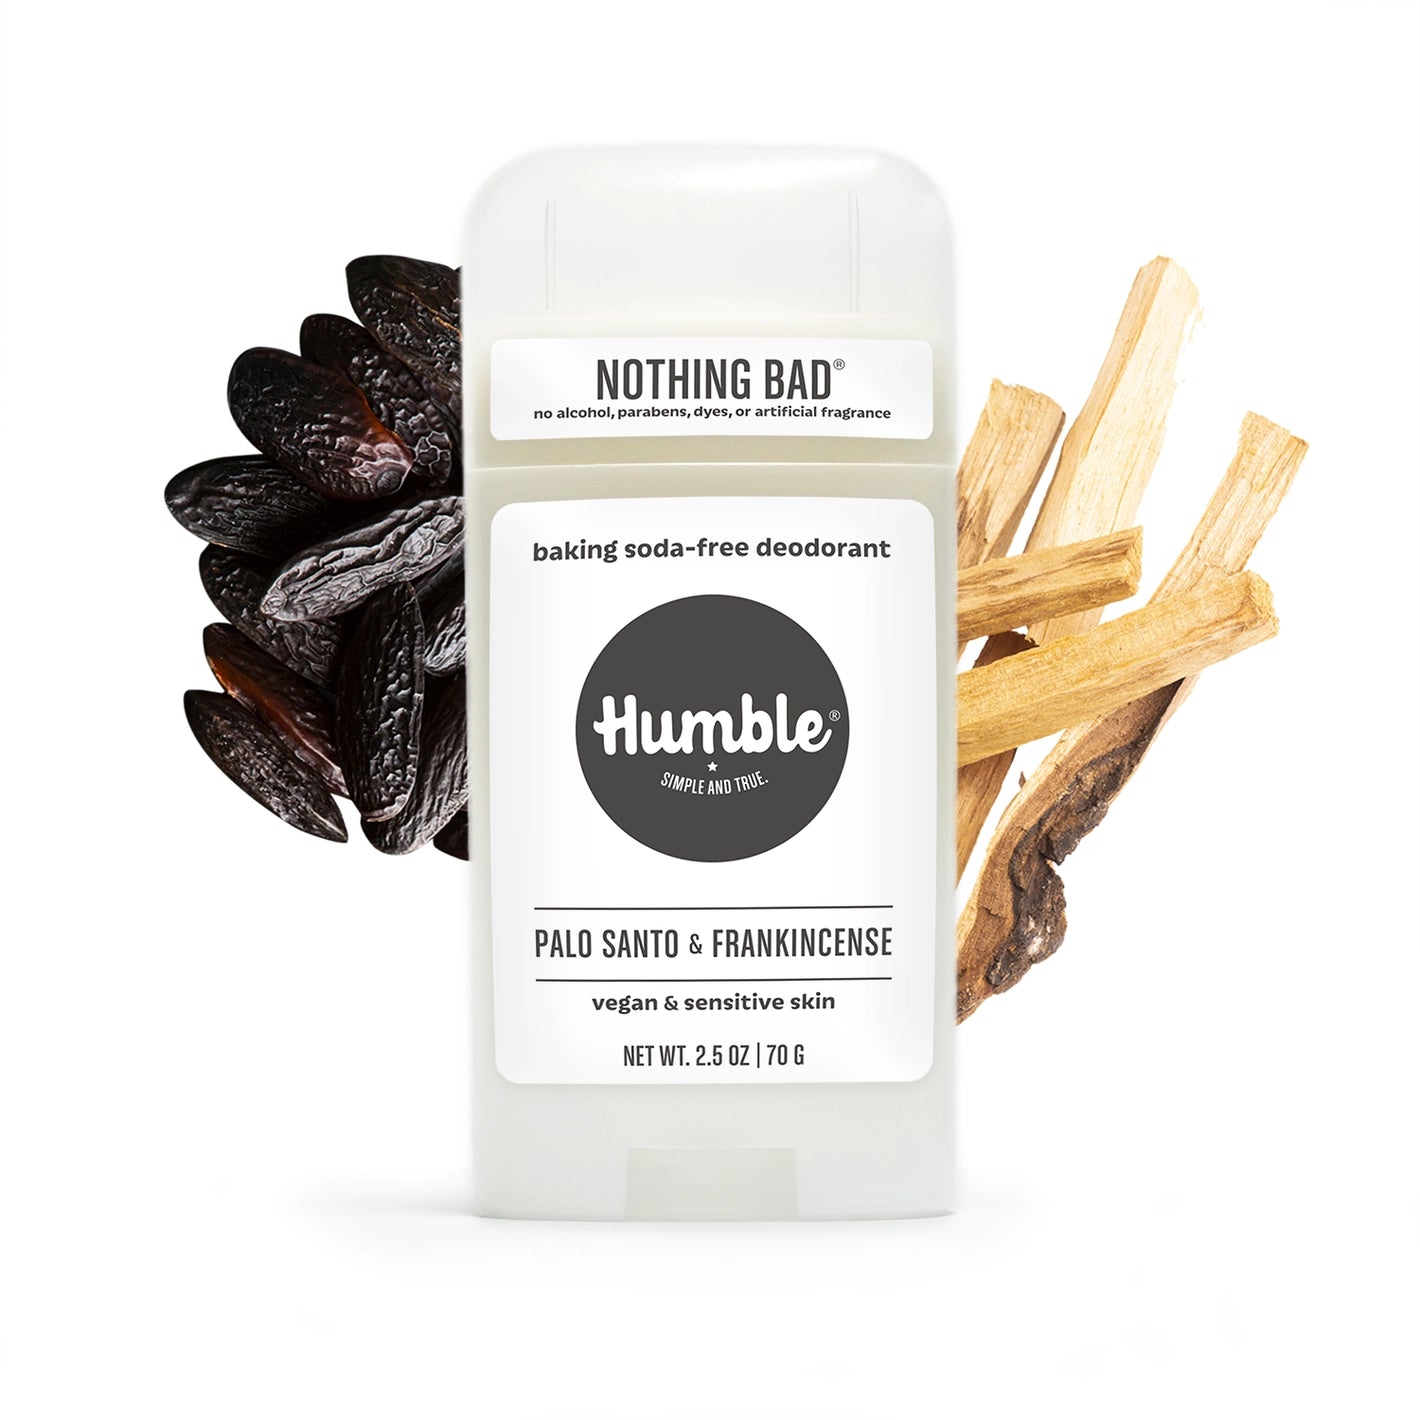 All Natural Deodorant - Humble brands